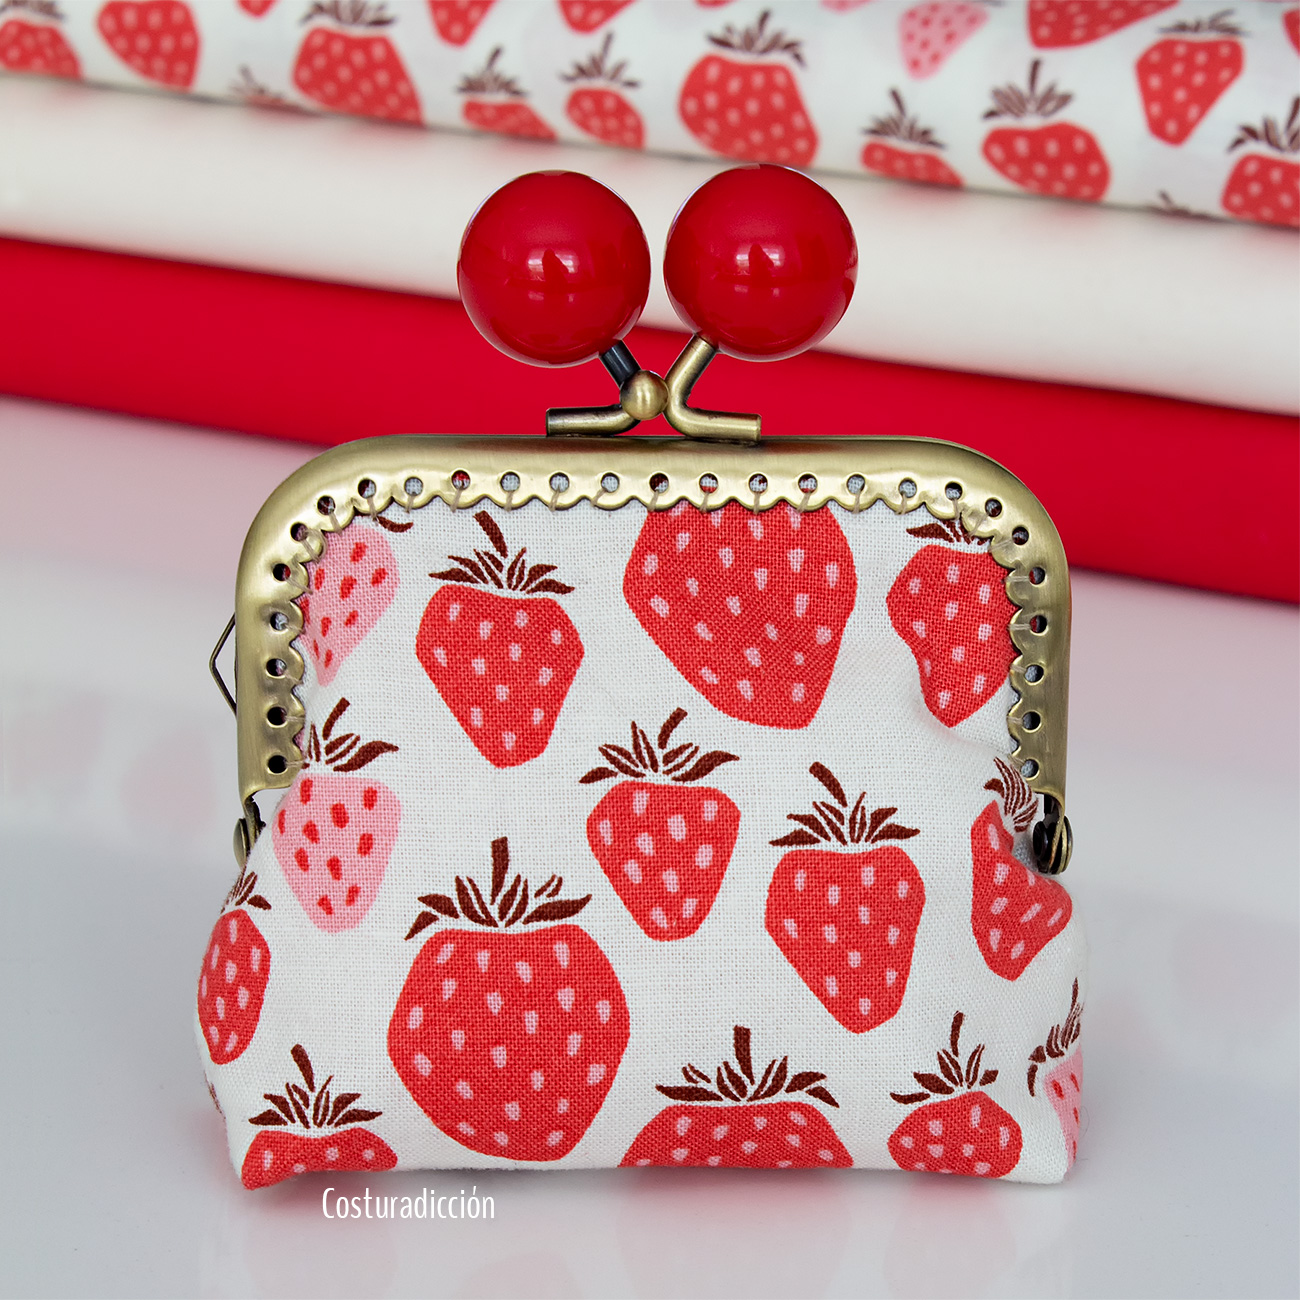 Imagen de producto: https://tienda.costuradiccion.com/img/articulos/secundarias14699-tela-cottonsteel-queen-of-berries-algodon-medio-metro-3.jpg